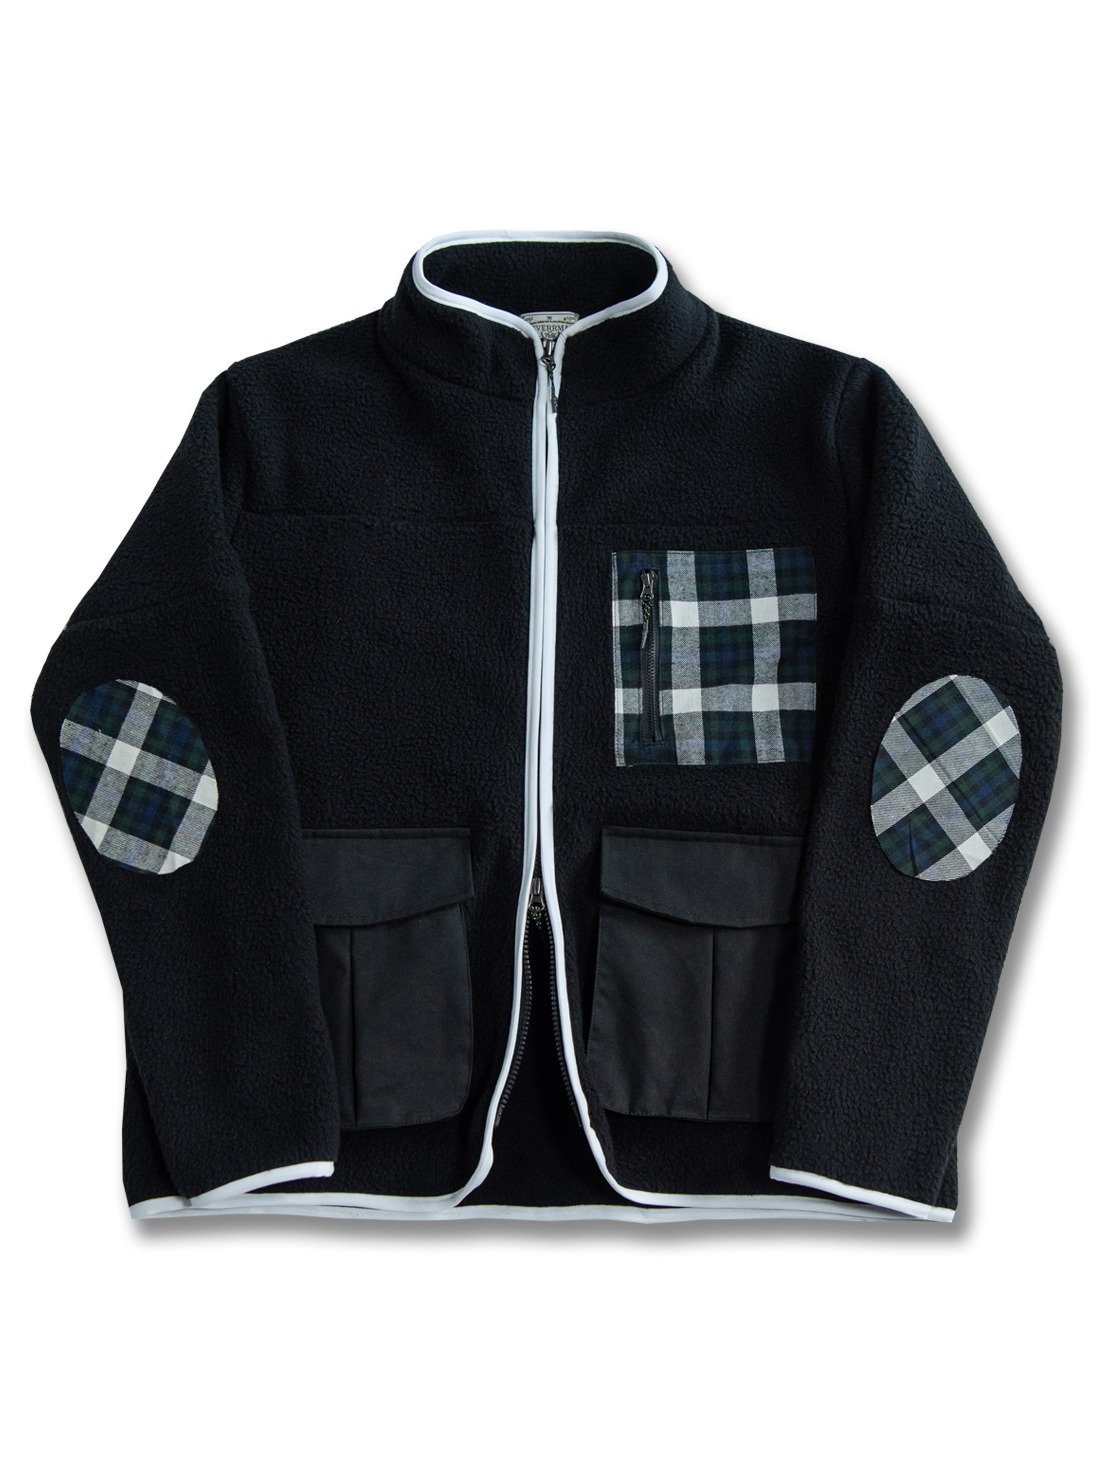 patch work fleece jacket (black)